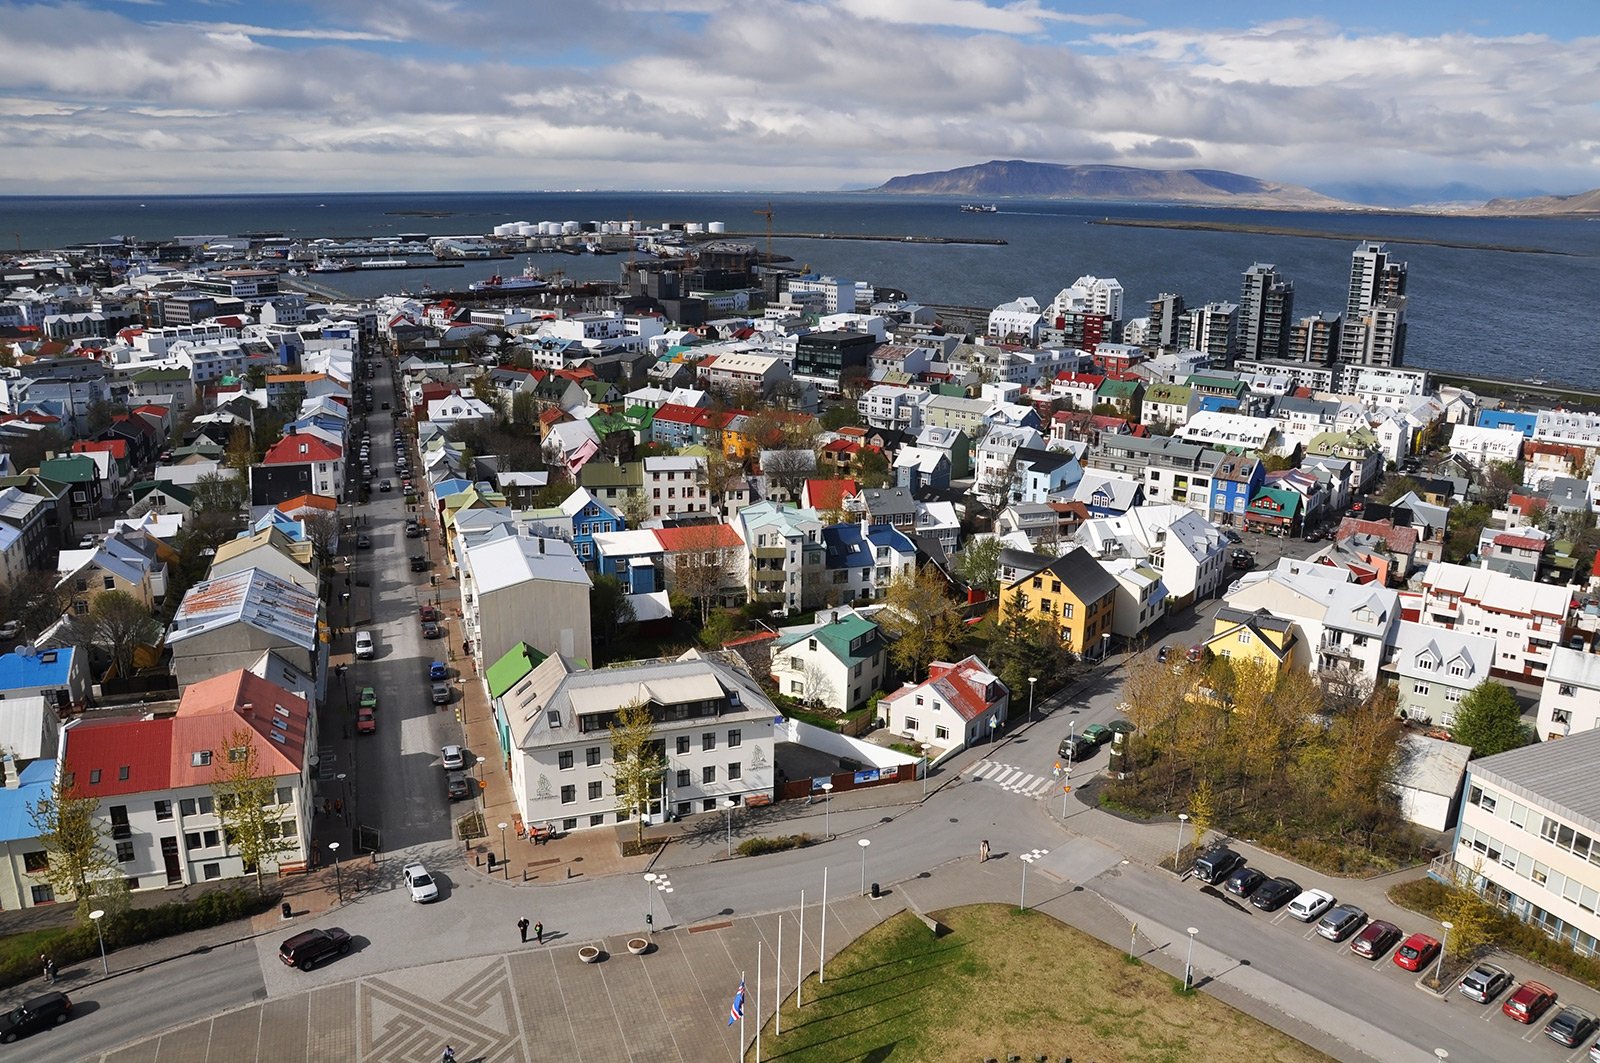 How to climb the Hallgrímskirkja in Reykjavik